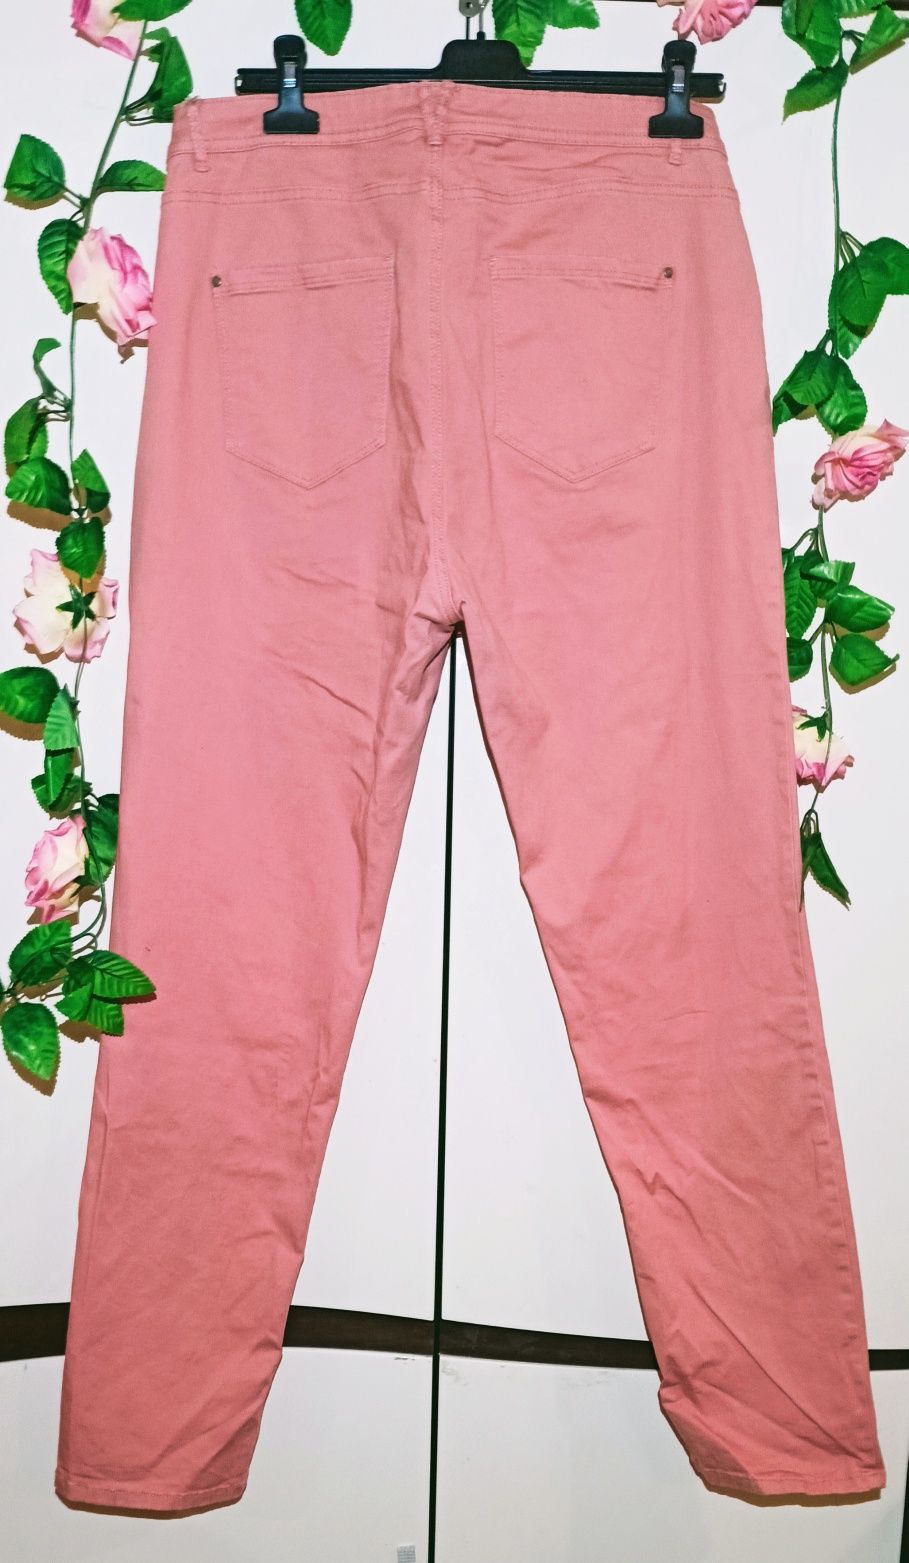 Dżinsy pudrowy róż Esmara Lidl 46 (3 XL)